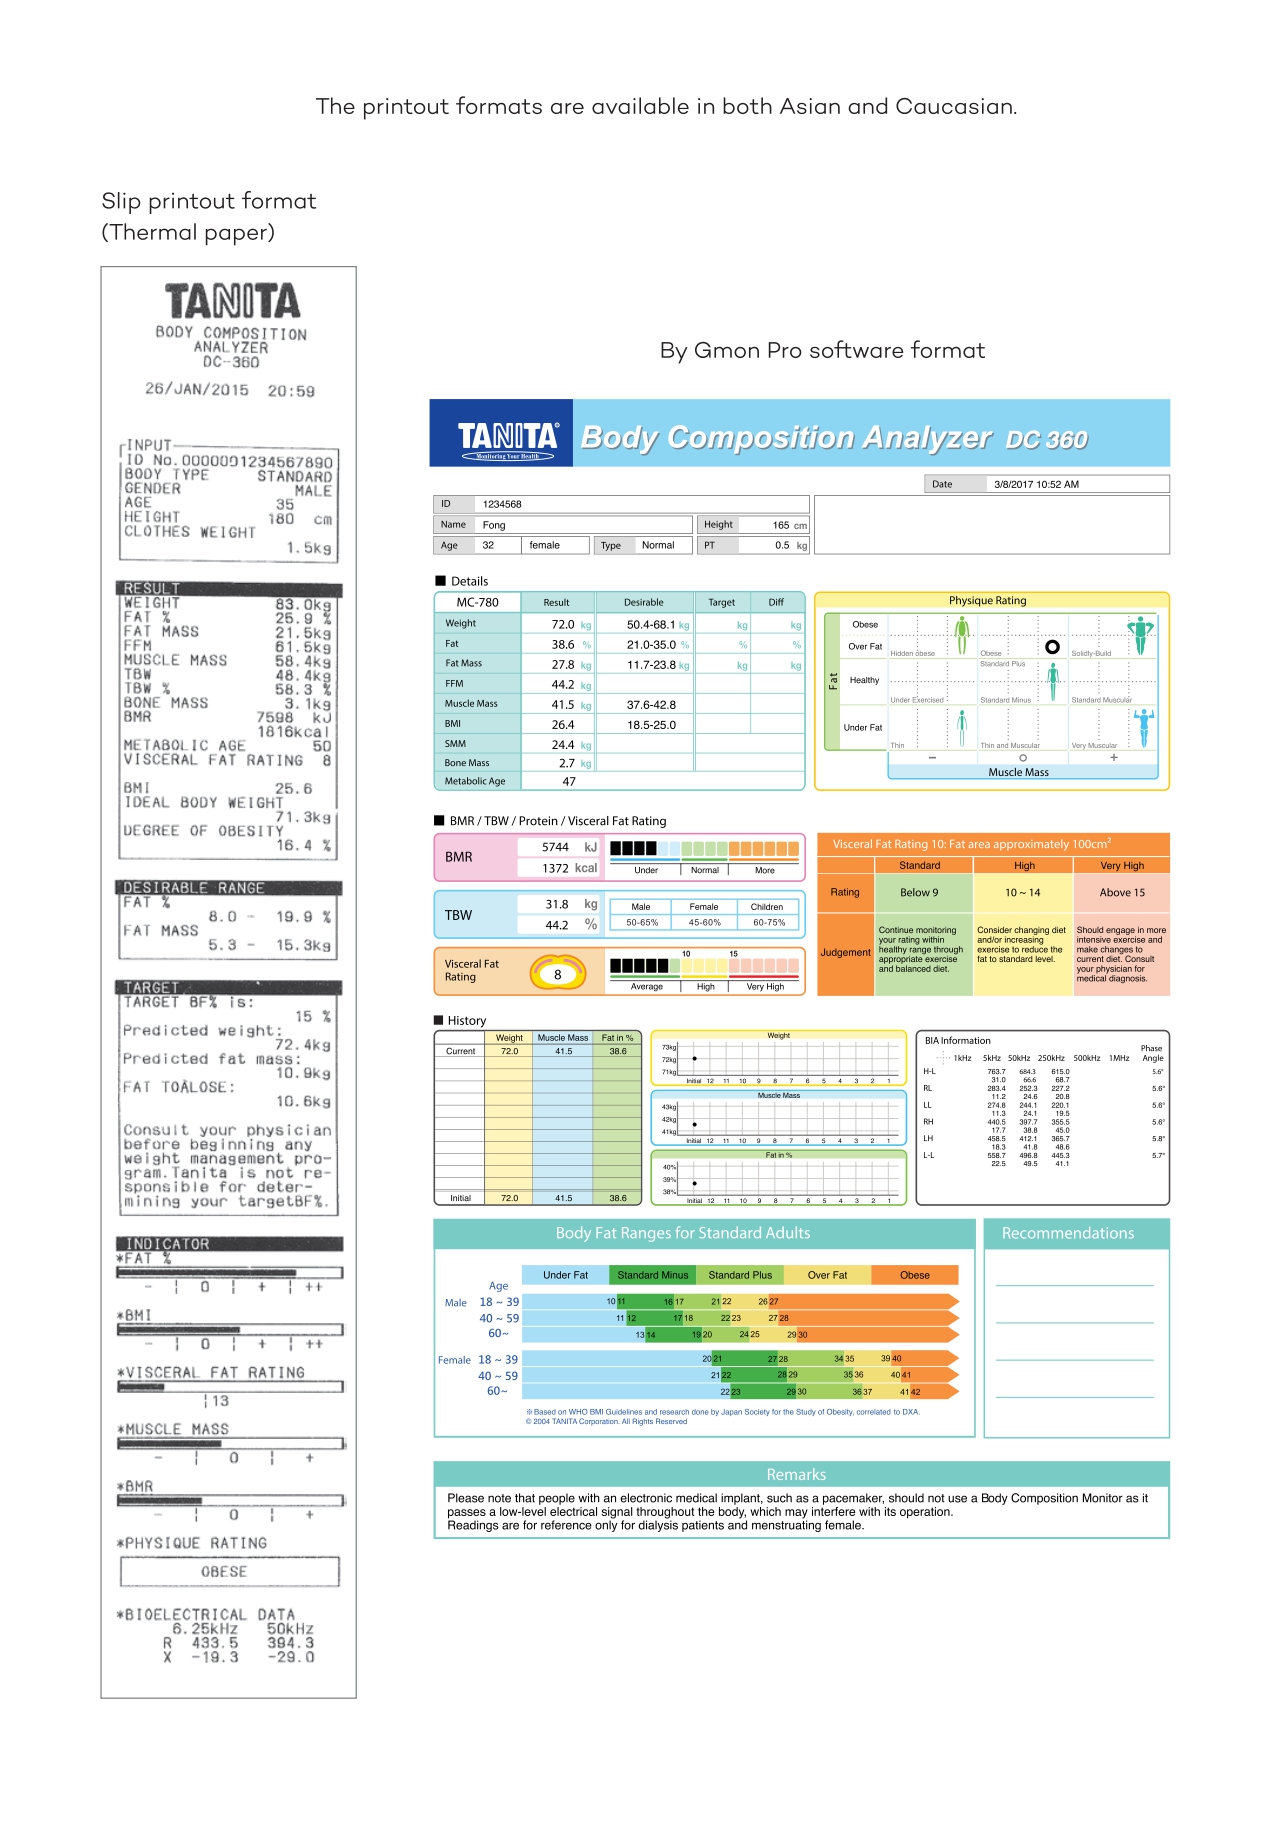 Tanita-Tanita 360-เครื่องตรวจวัดมวลกล้ามเนื้อ และองค์ประกอบของร่างกาย Body Composition TANITA DC360